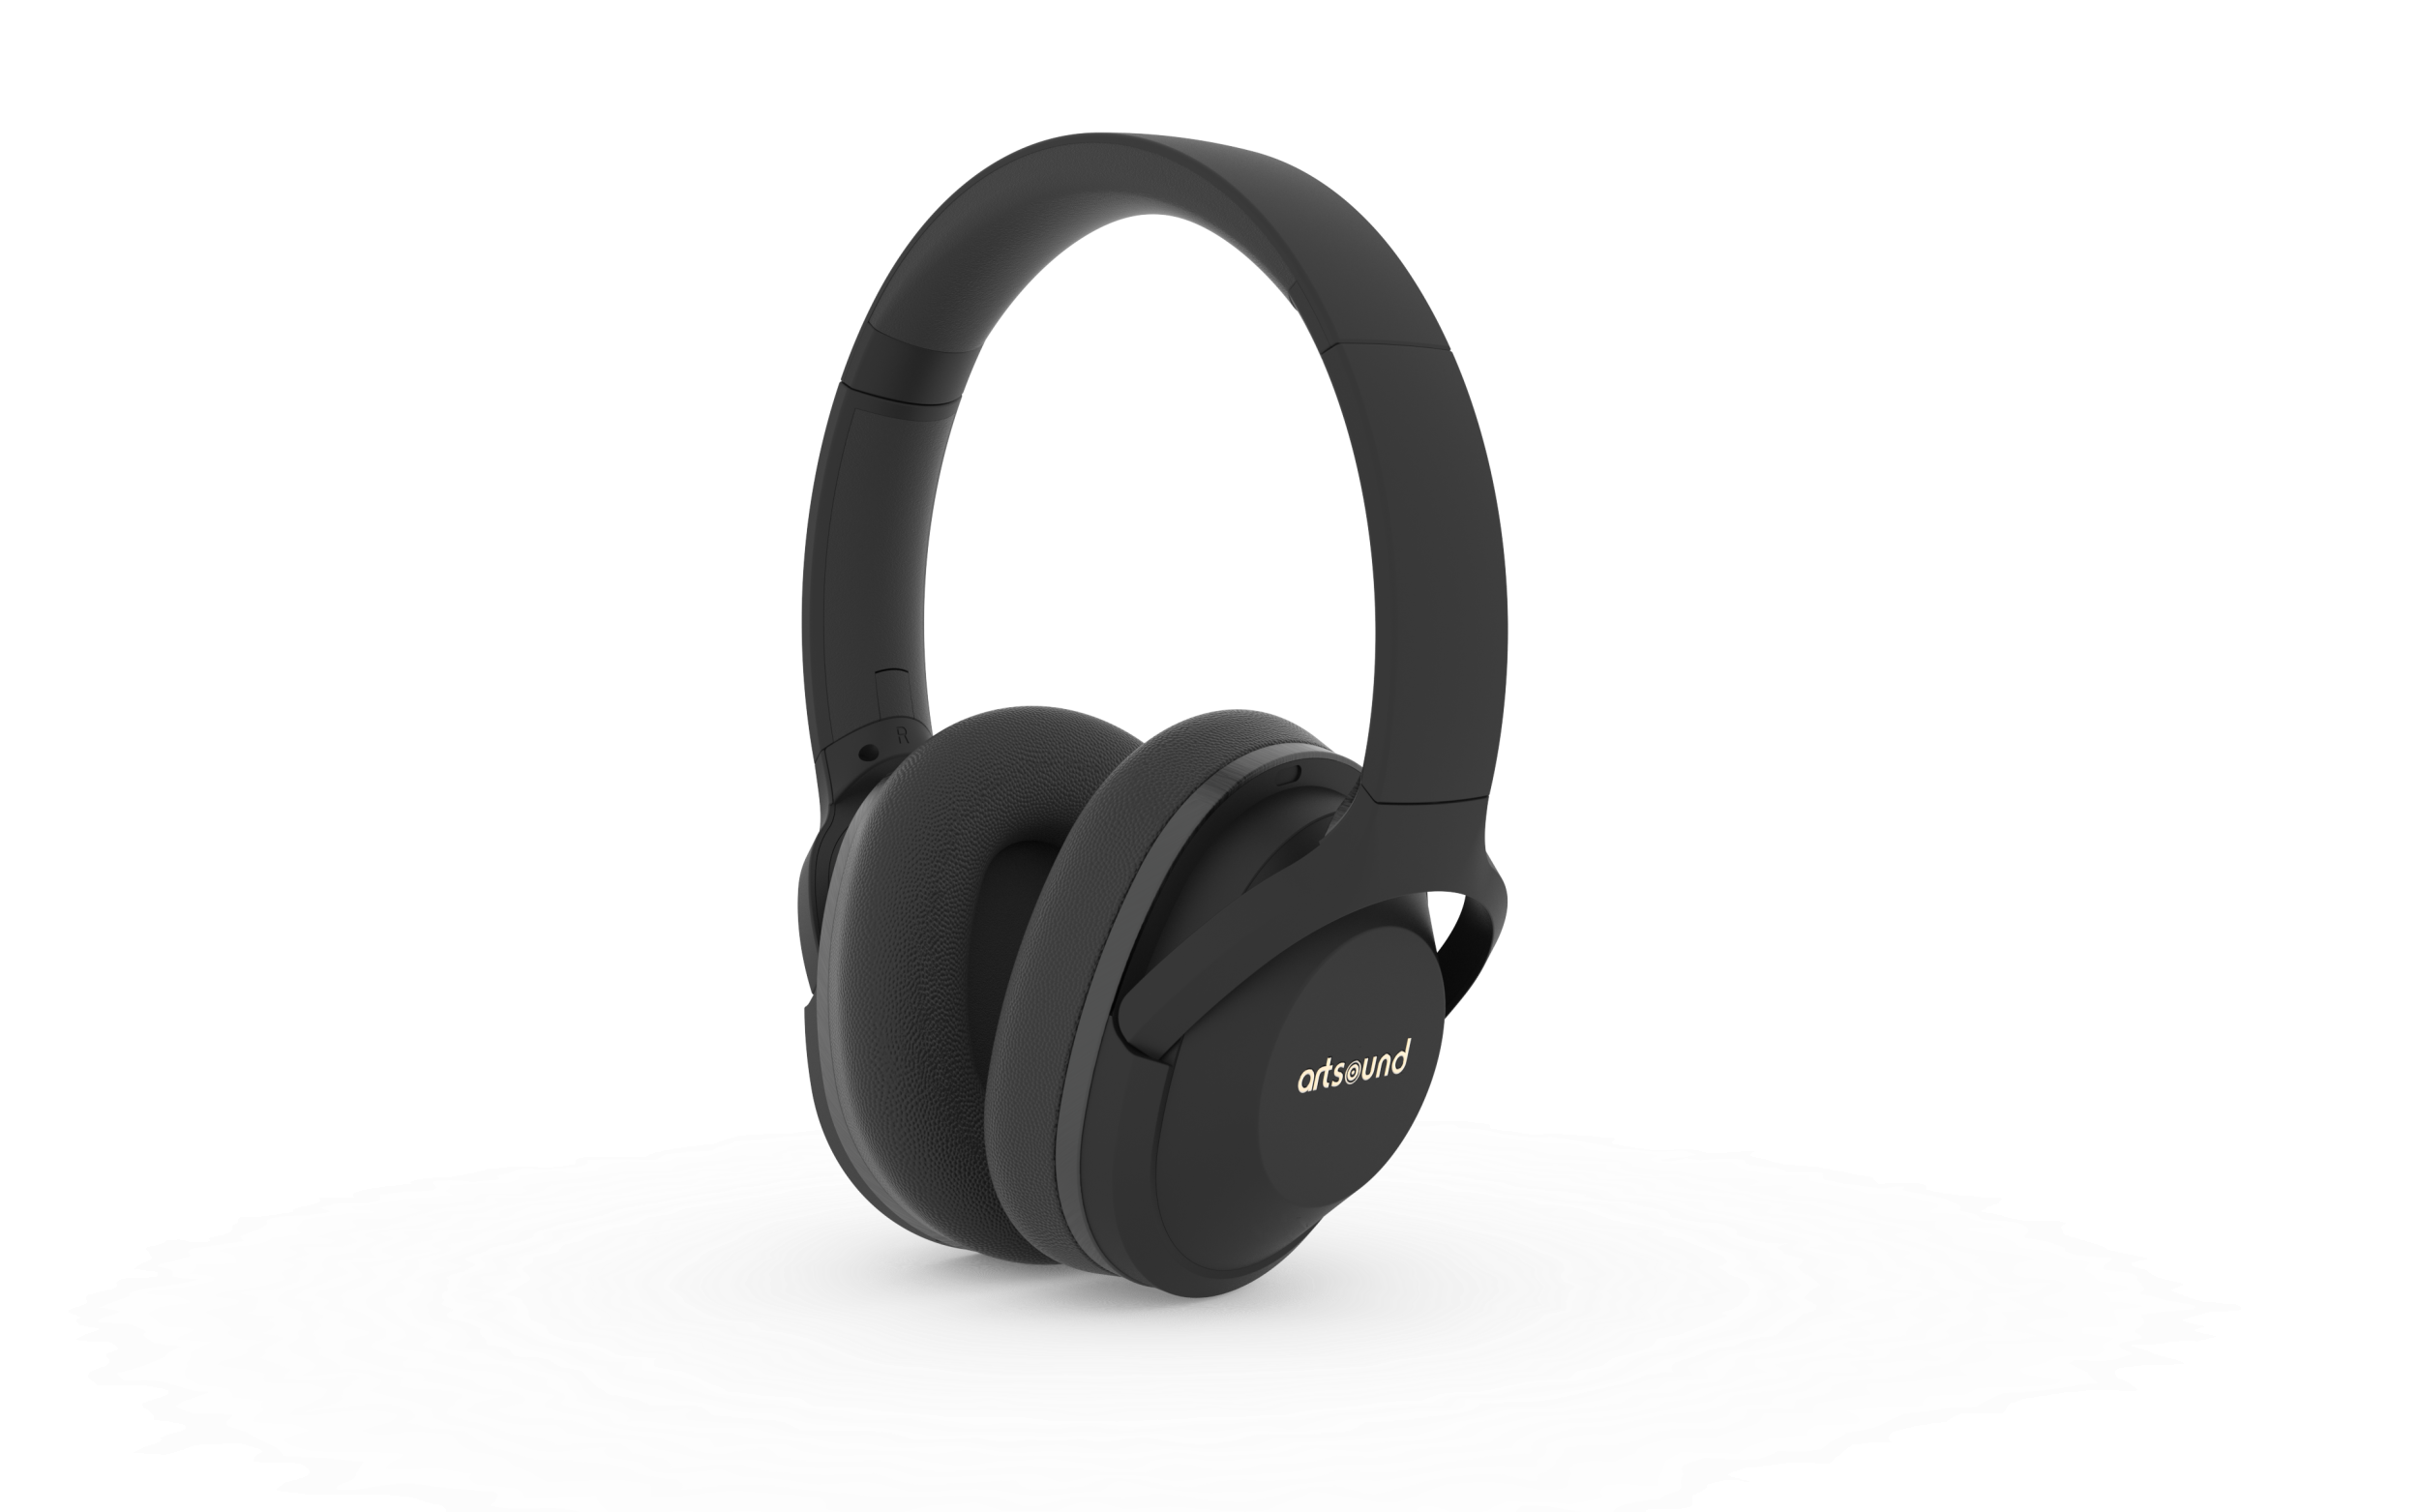 BRAINWAVE07, ANC wireless over-ear headphones, black